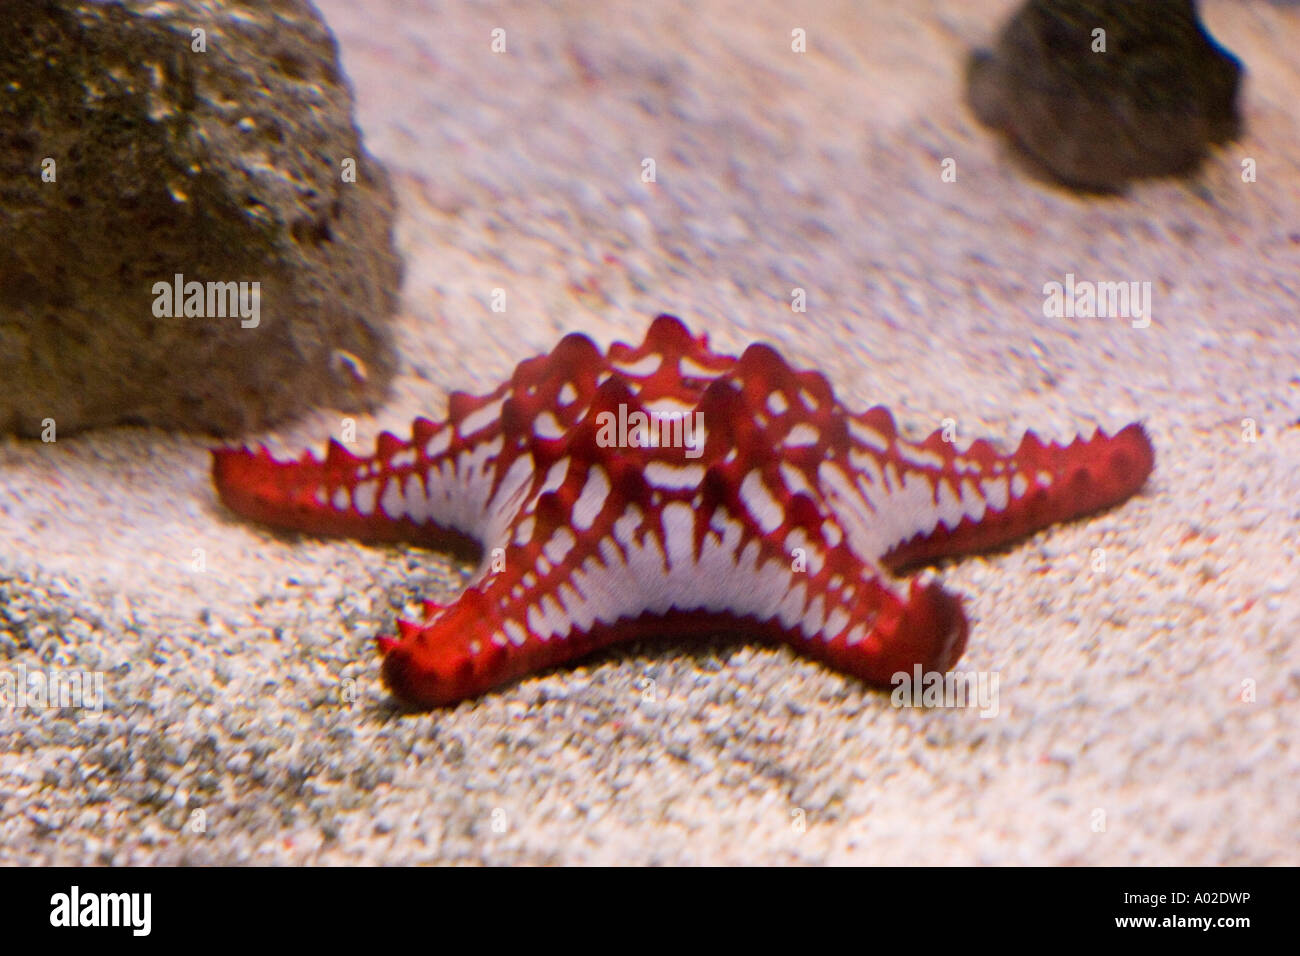 Red knobbed starfish in an aquarium Stock Photo